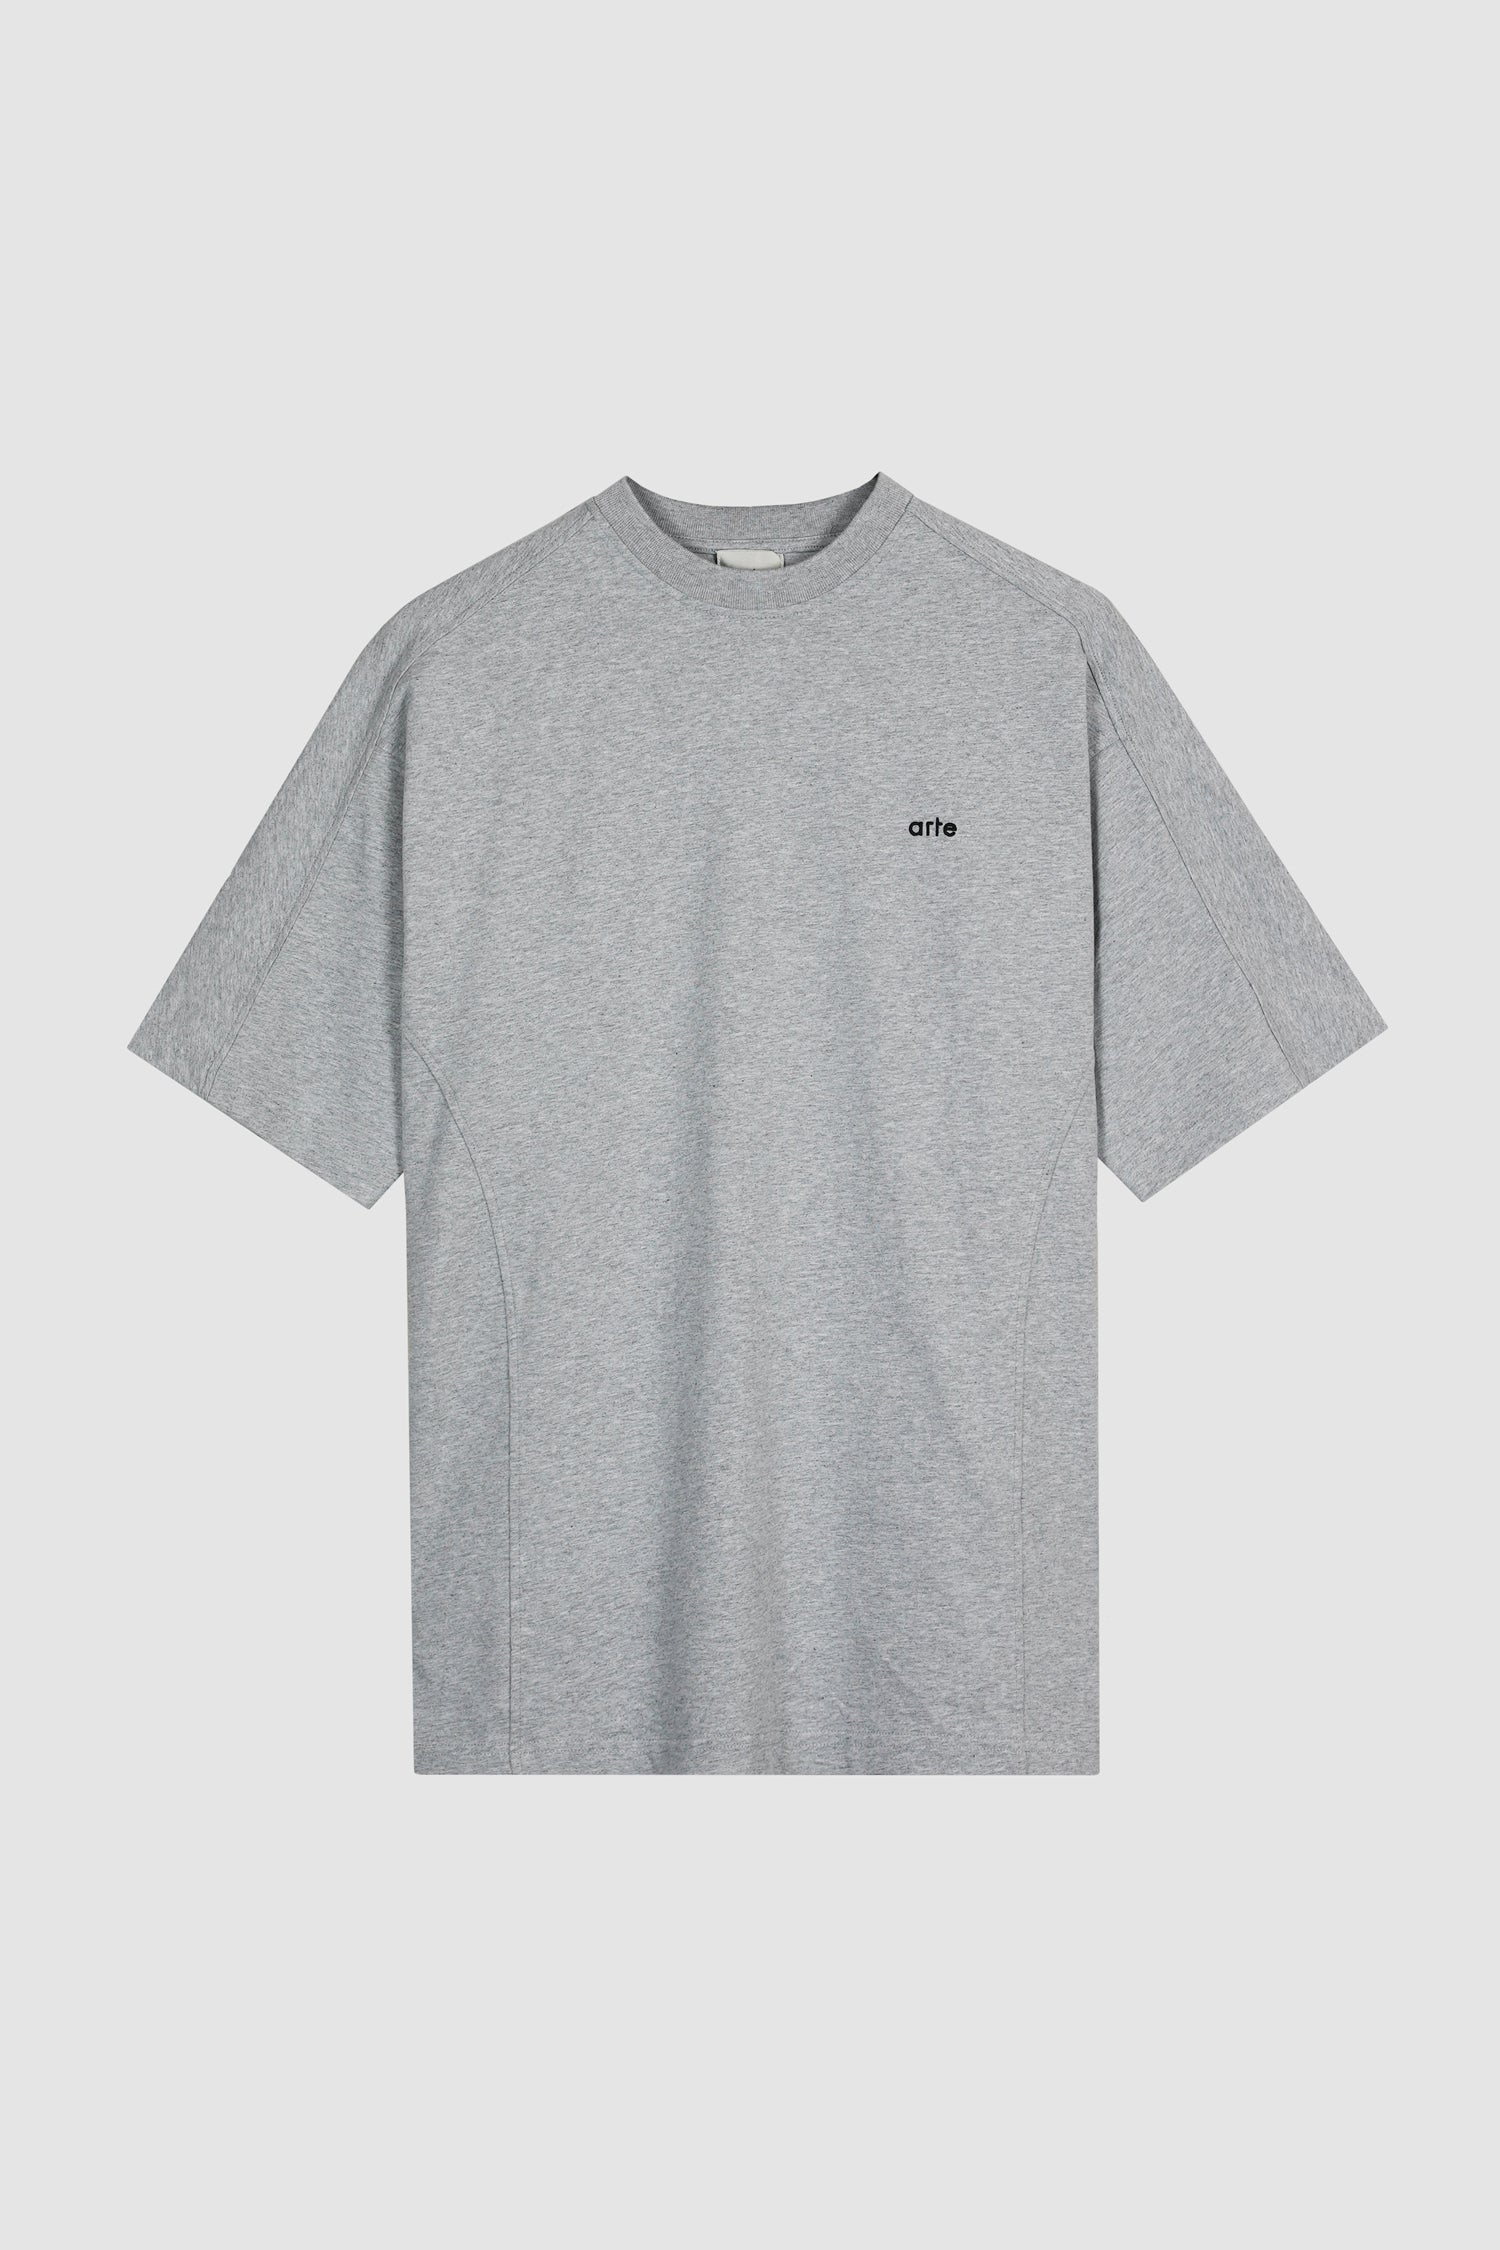 Theo S Cuts T-shirt - Grey